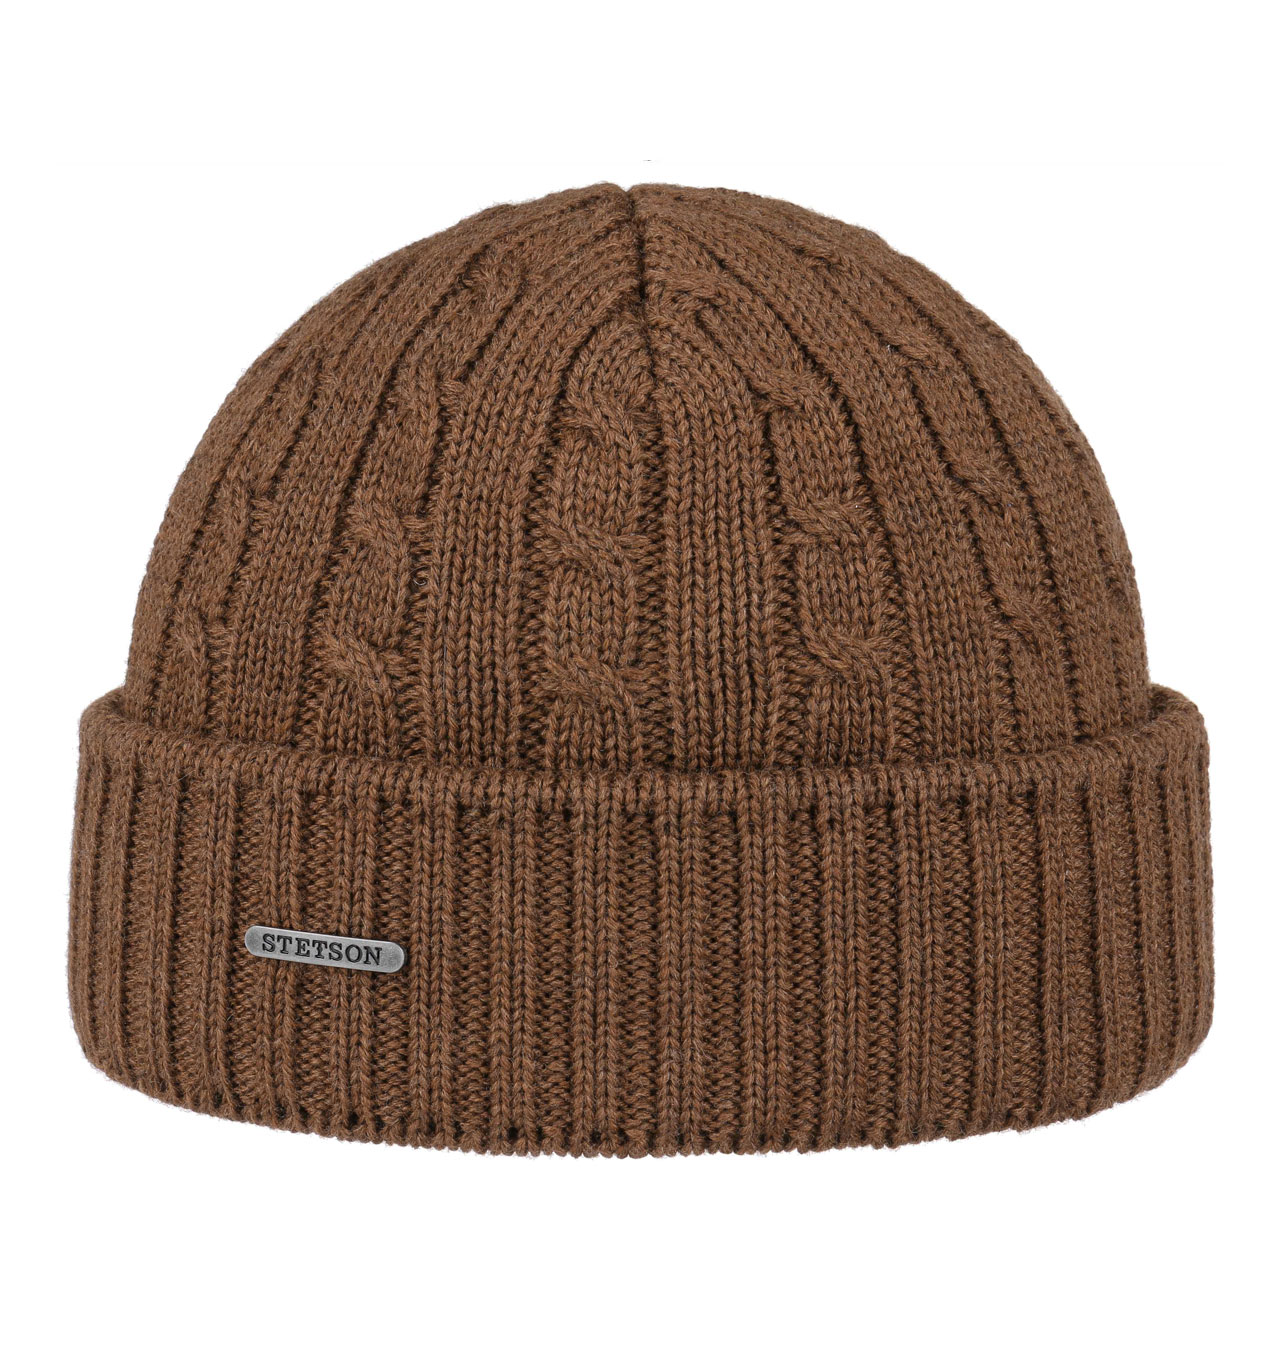 Stetson - Georgia Wool Knit Hat - Brown